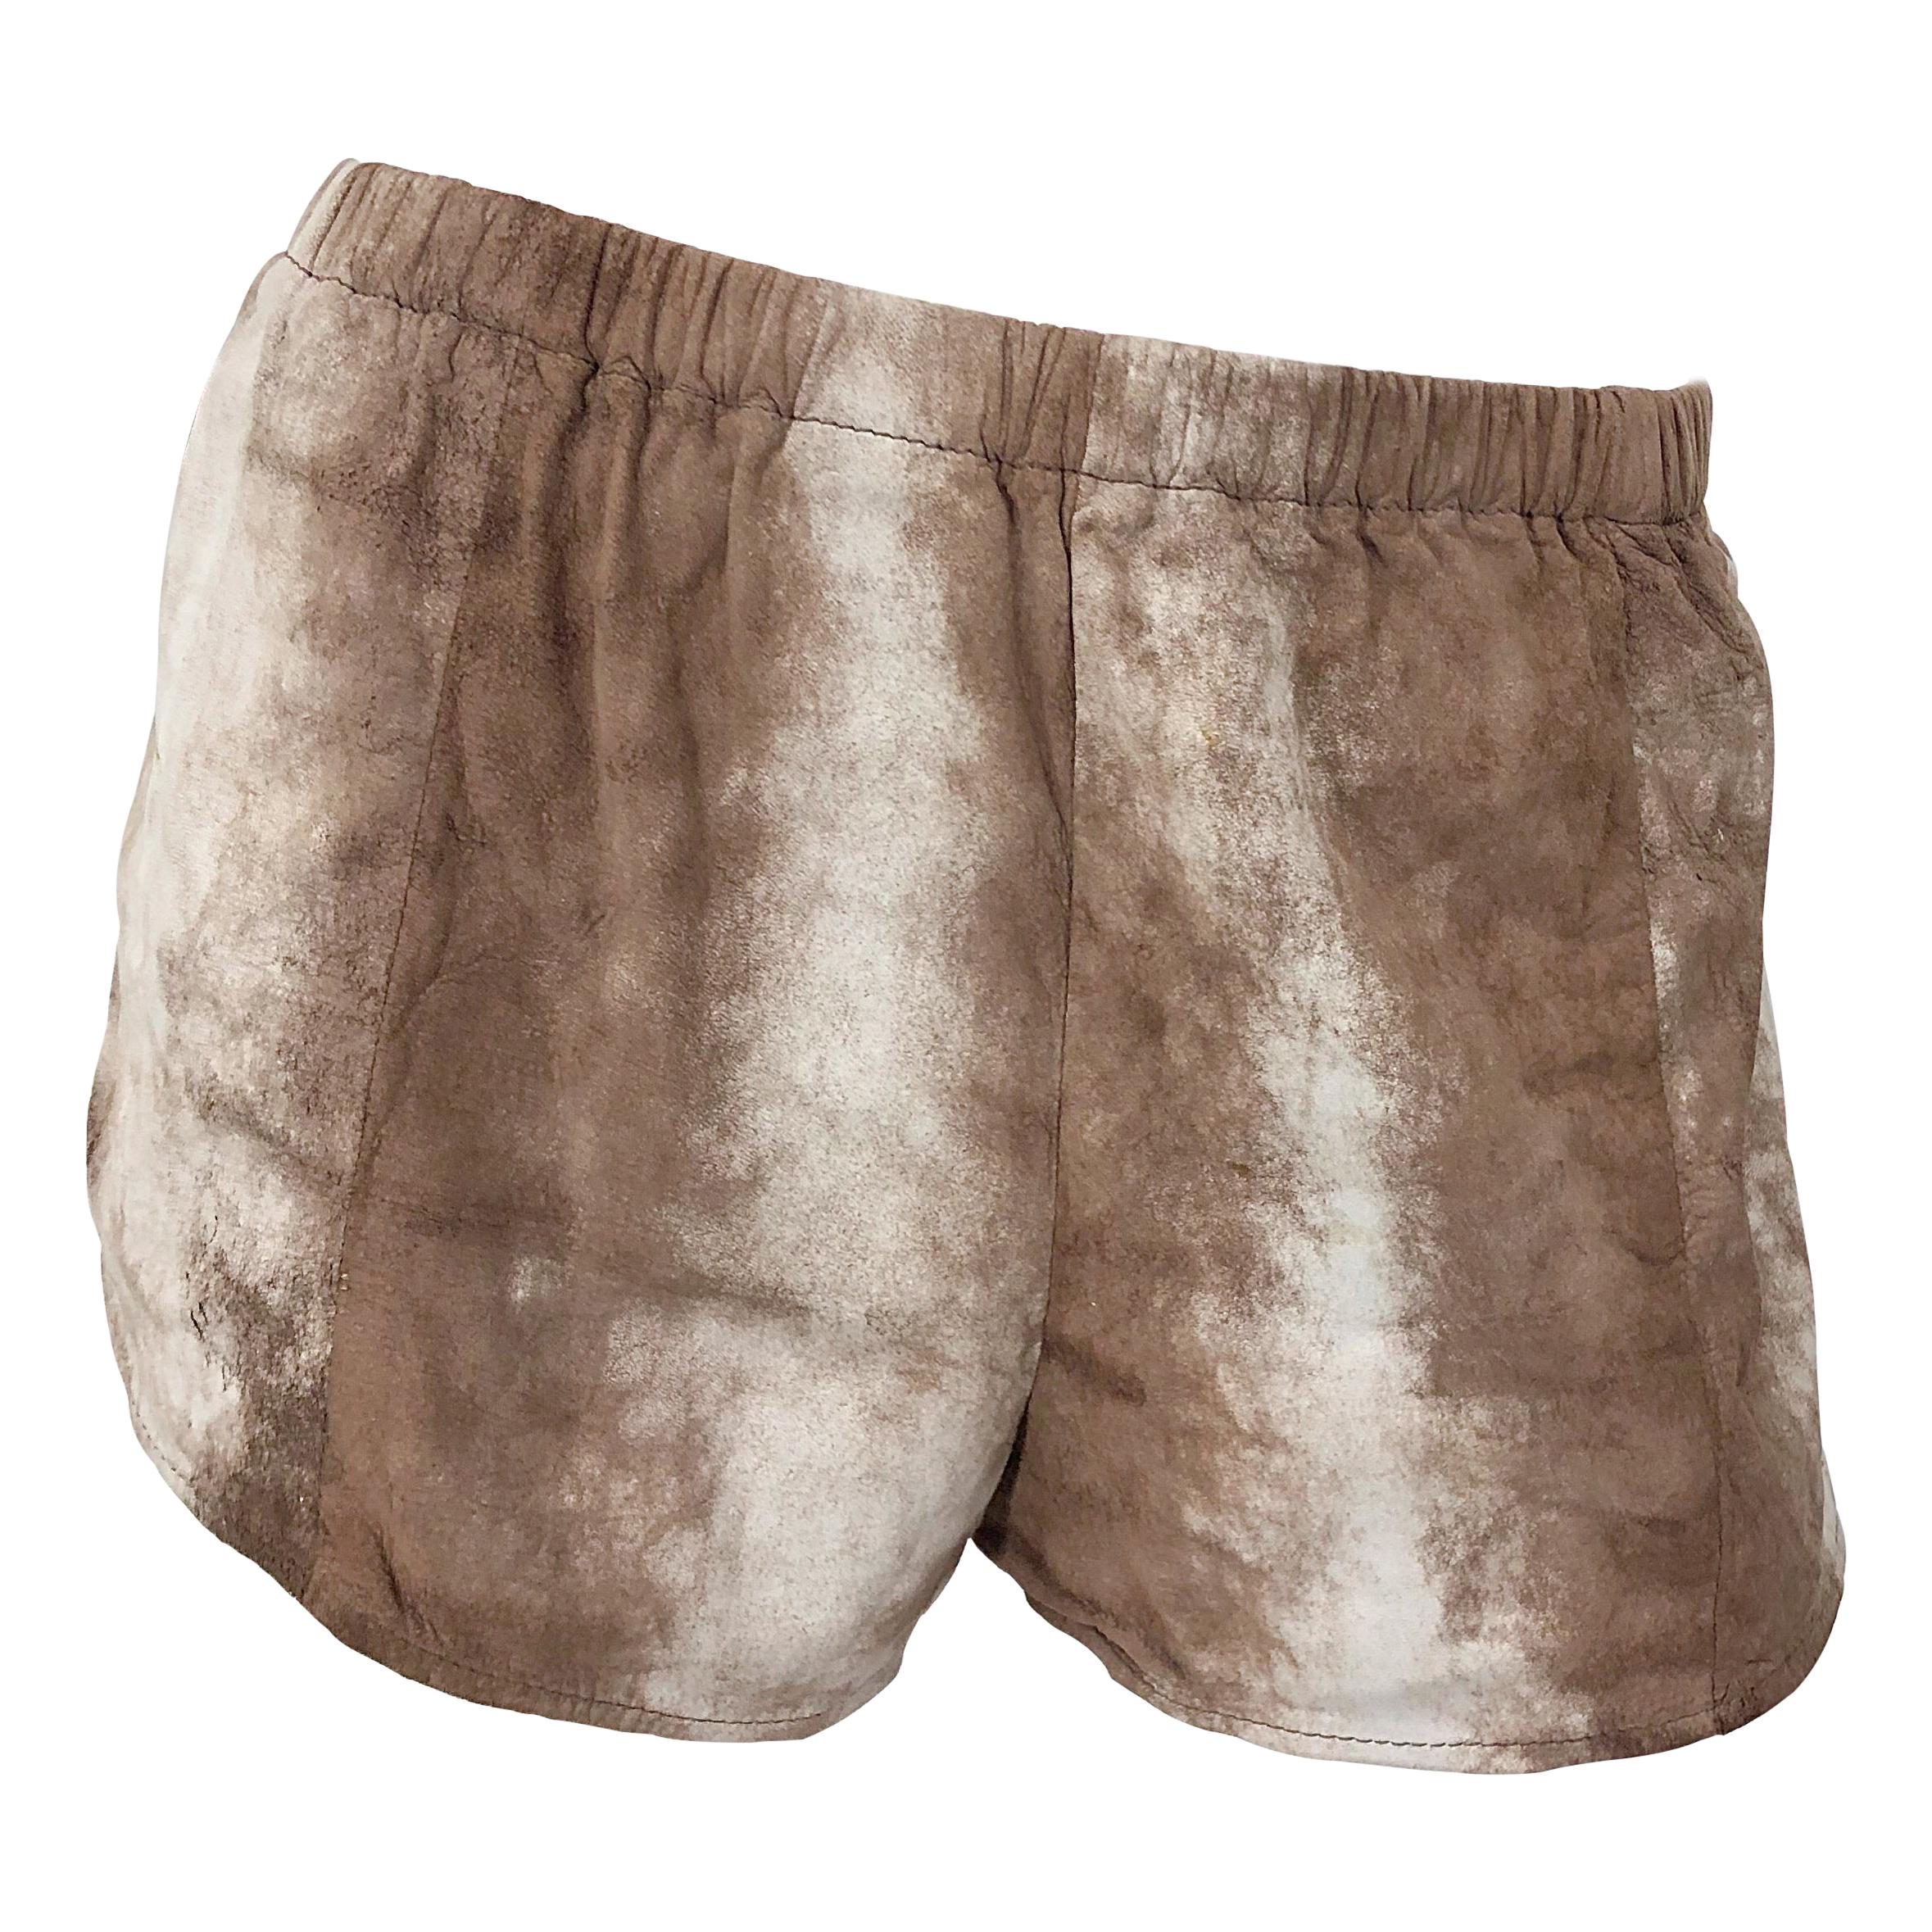 1980s Love, Melody Sabatasso Sheepskin Leather Brown Vintage 80s Hot Pant Shorts